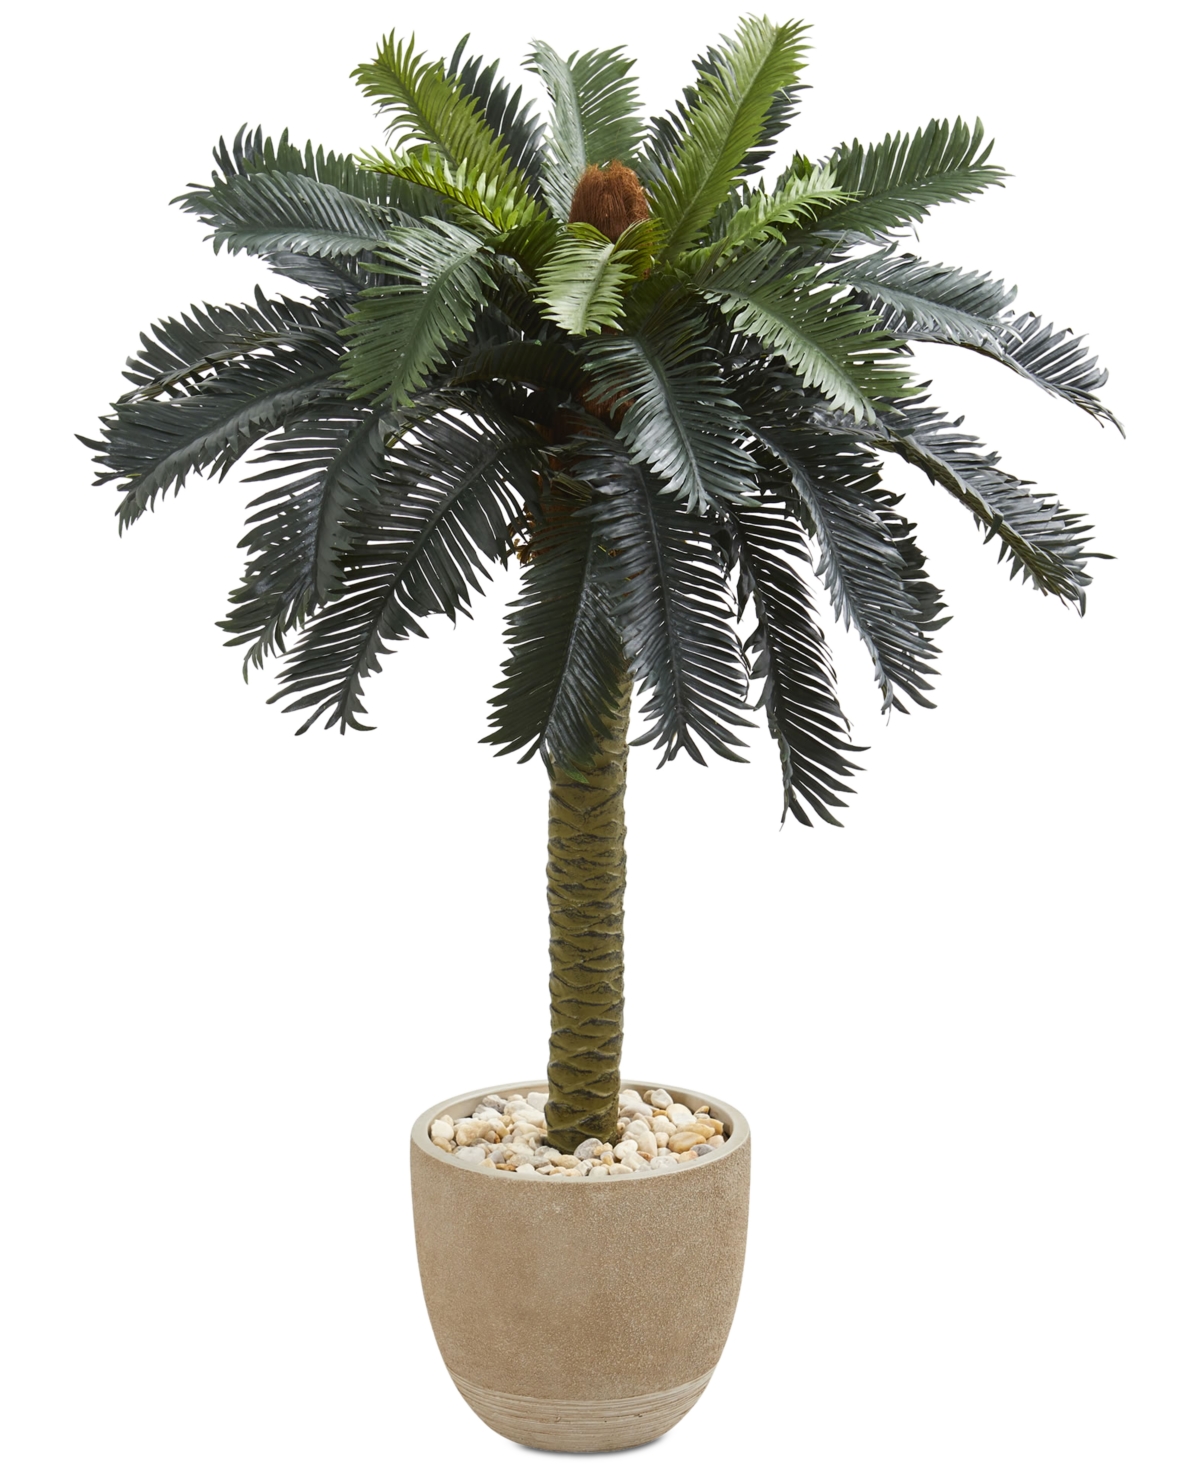 3.5' Sago Palm Artificial Tree in Sandstone-Finish Planter - Green